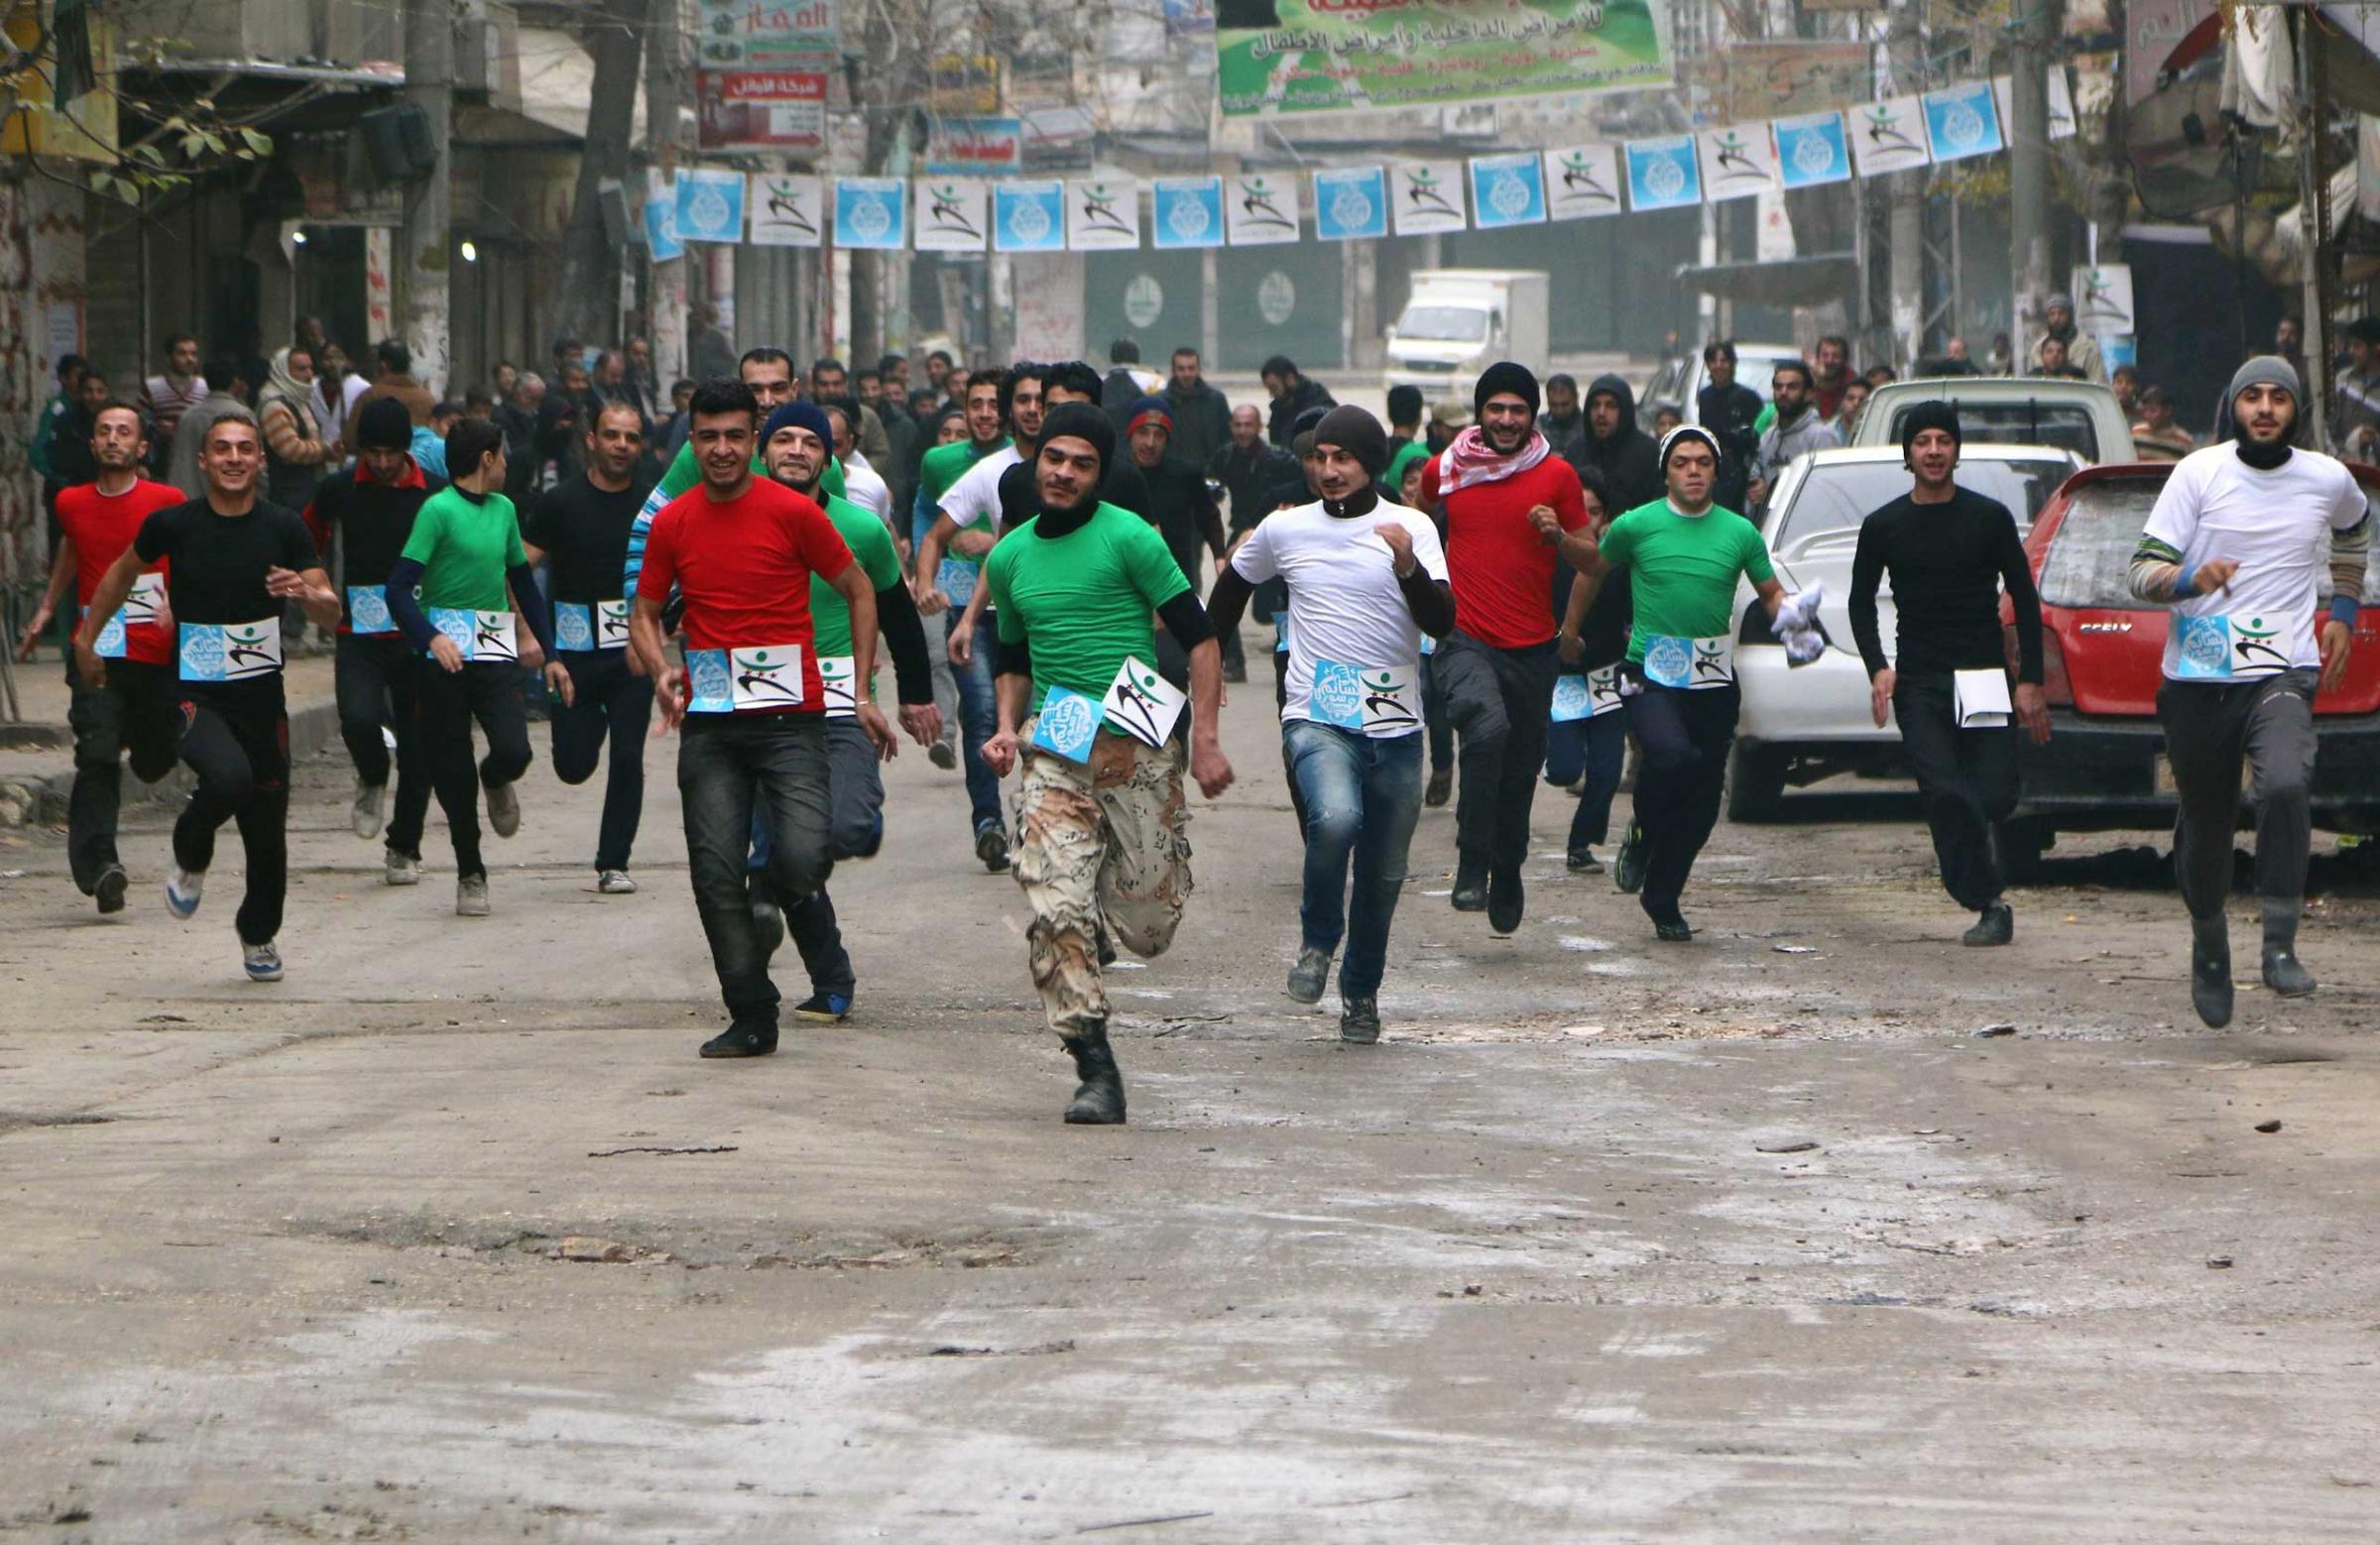 Participants compete in a running race along a street in Aleppo's Bustan al-Qasr neighbourhood